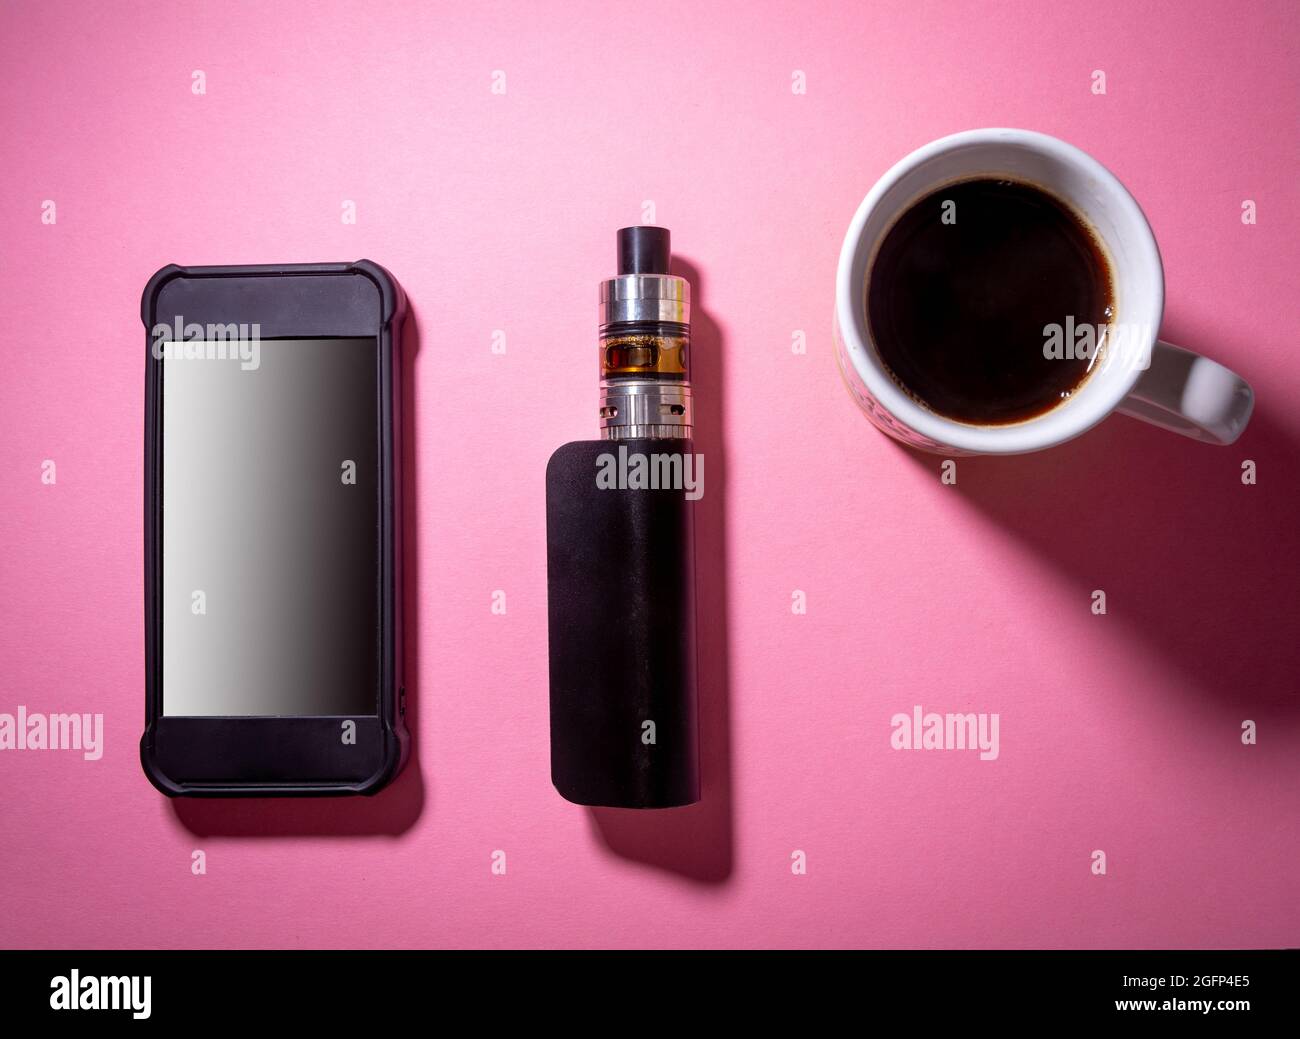 teléfono móvil, cigarrillo eléctrico y café sobre fondo rosa, concepto de descanso o tomar una pausa . Foto de stock